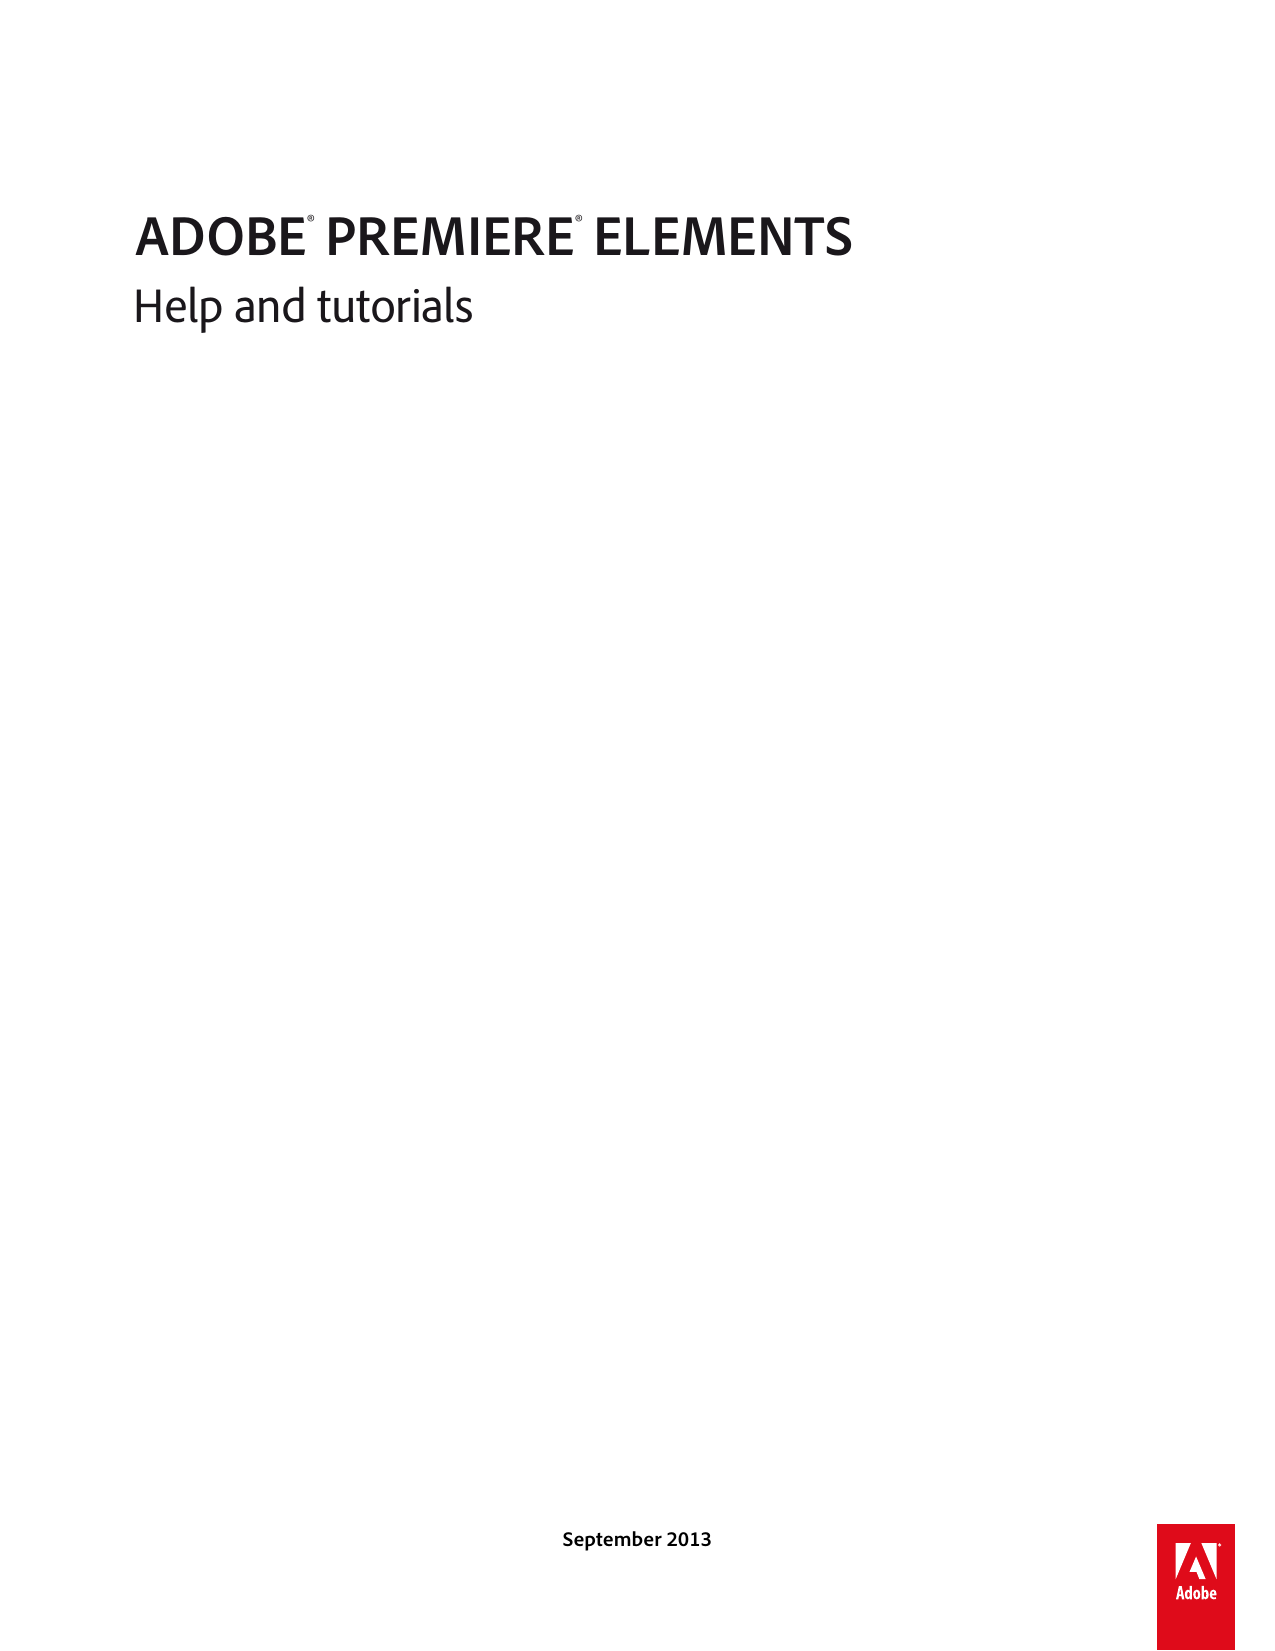 adobe premier elements 12